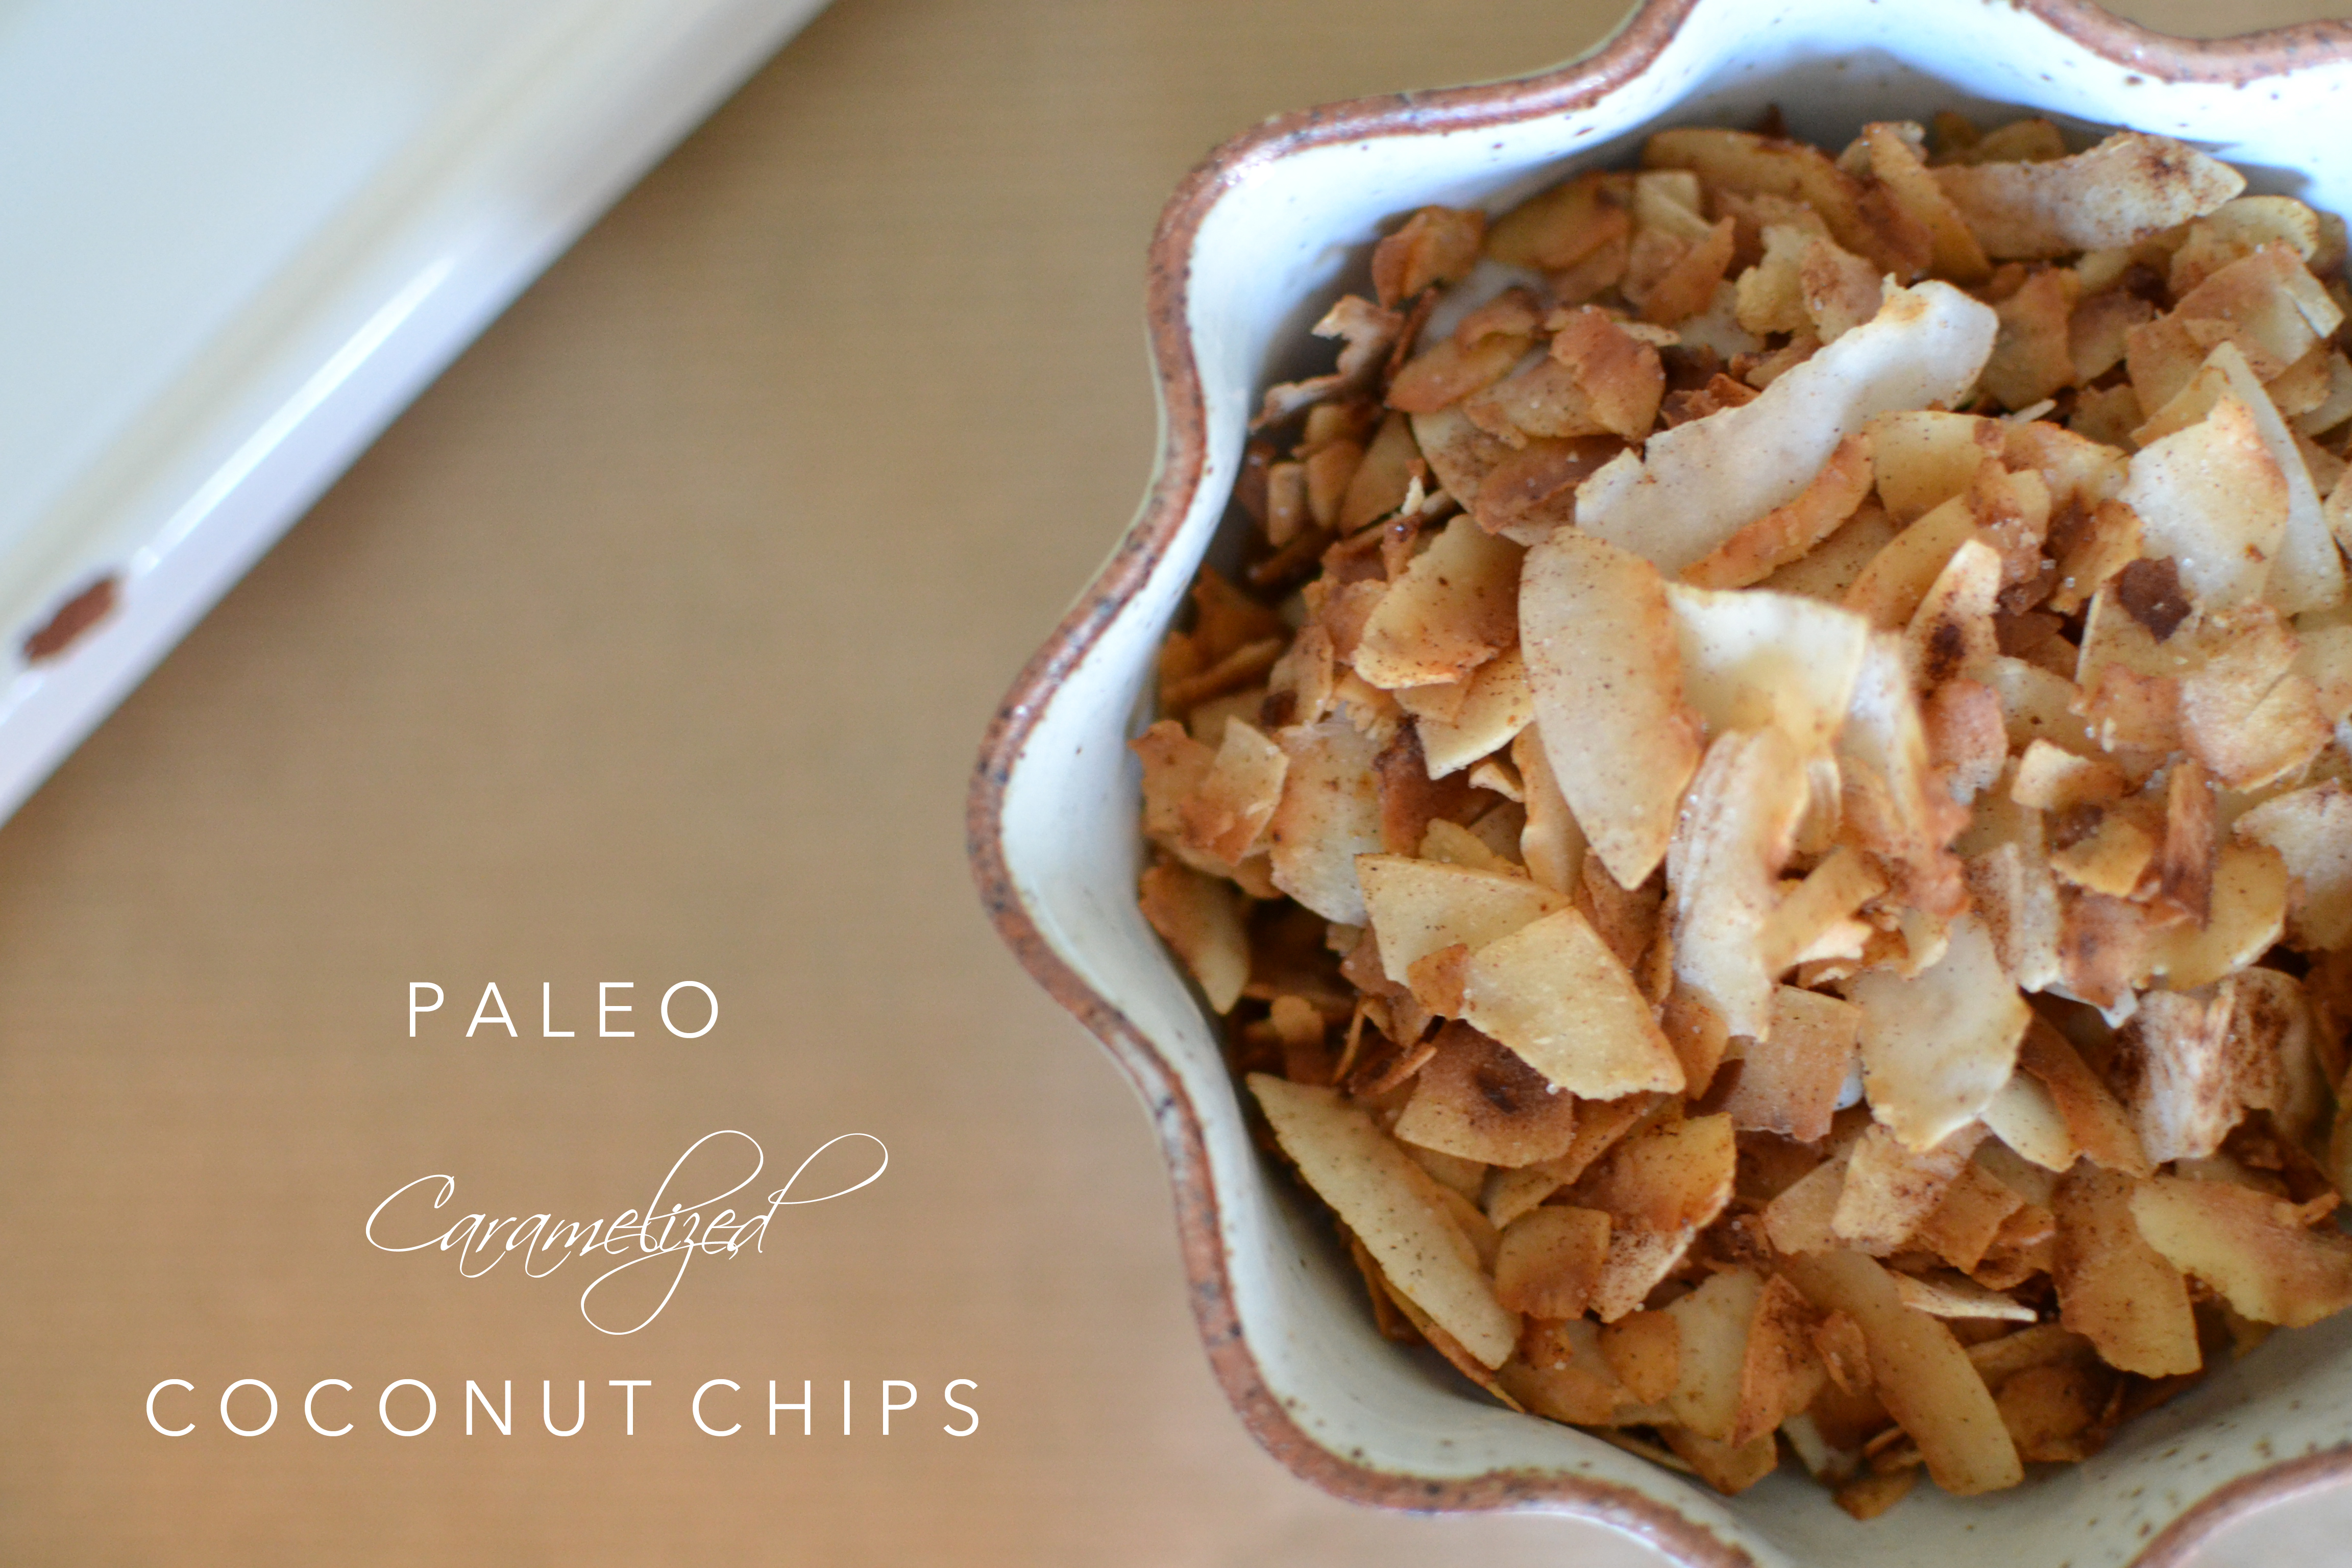 Paleo Caramelized Coconut Chips